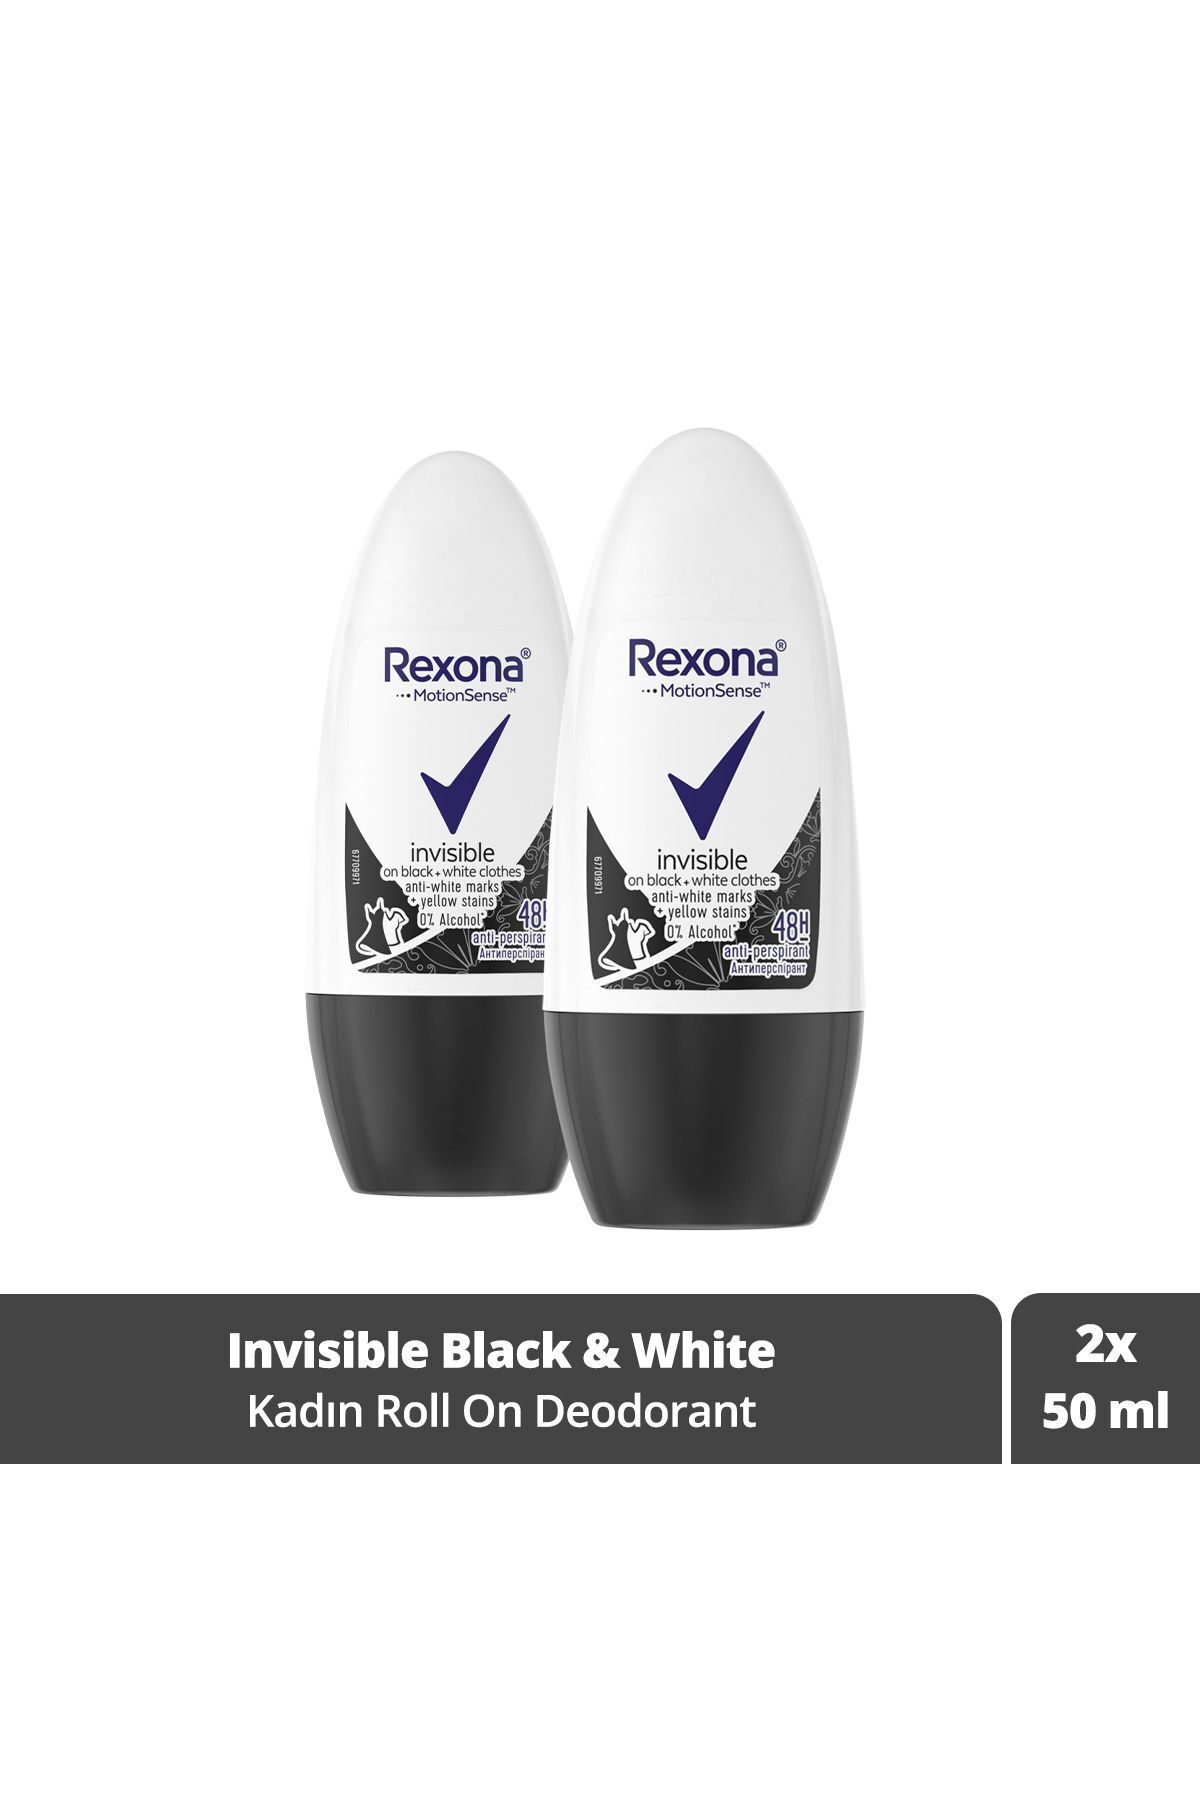 Rexona Kadın Roll On Deodorant Invisible On Black White Clothes 50 ml X2 Adet